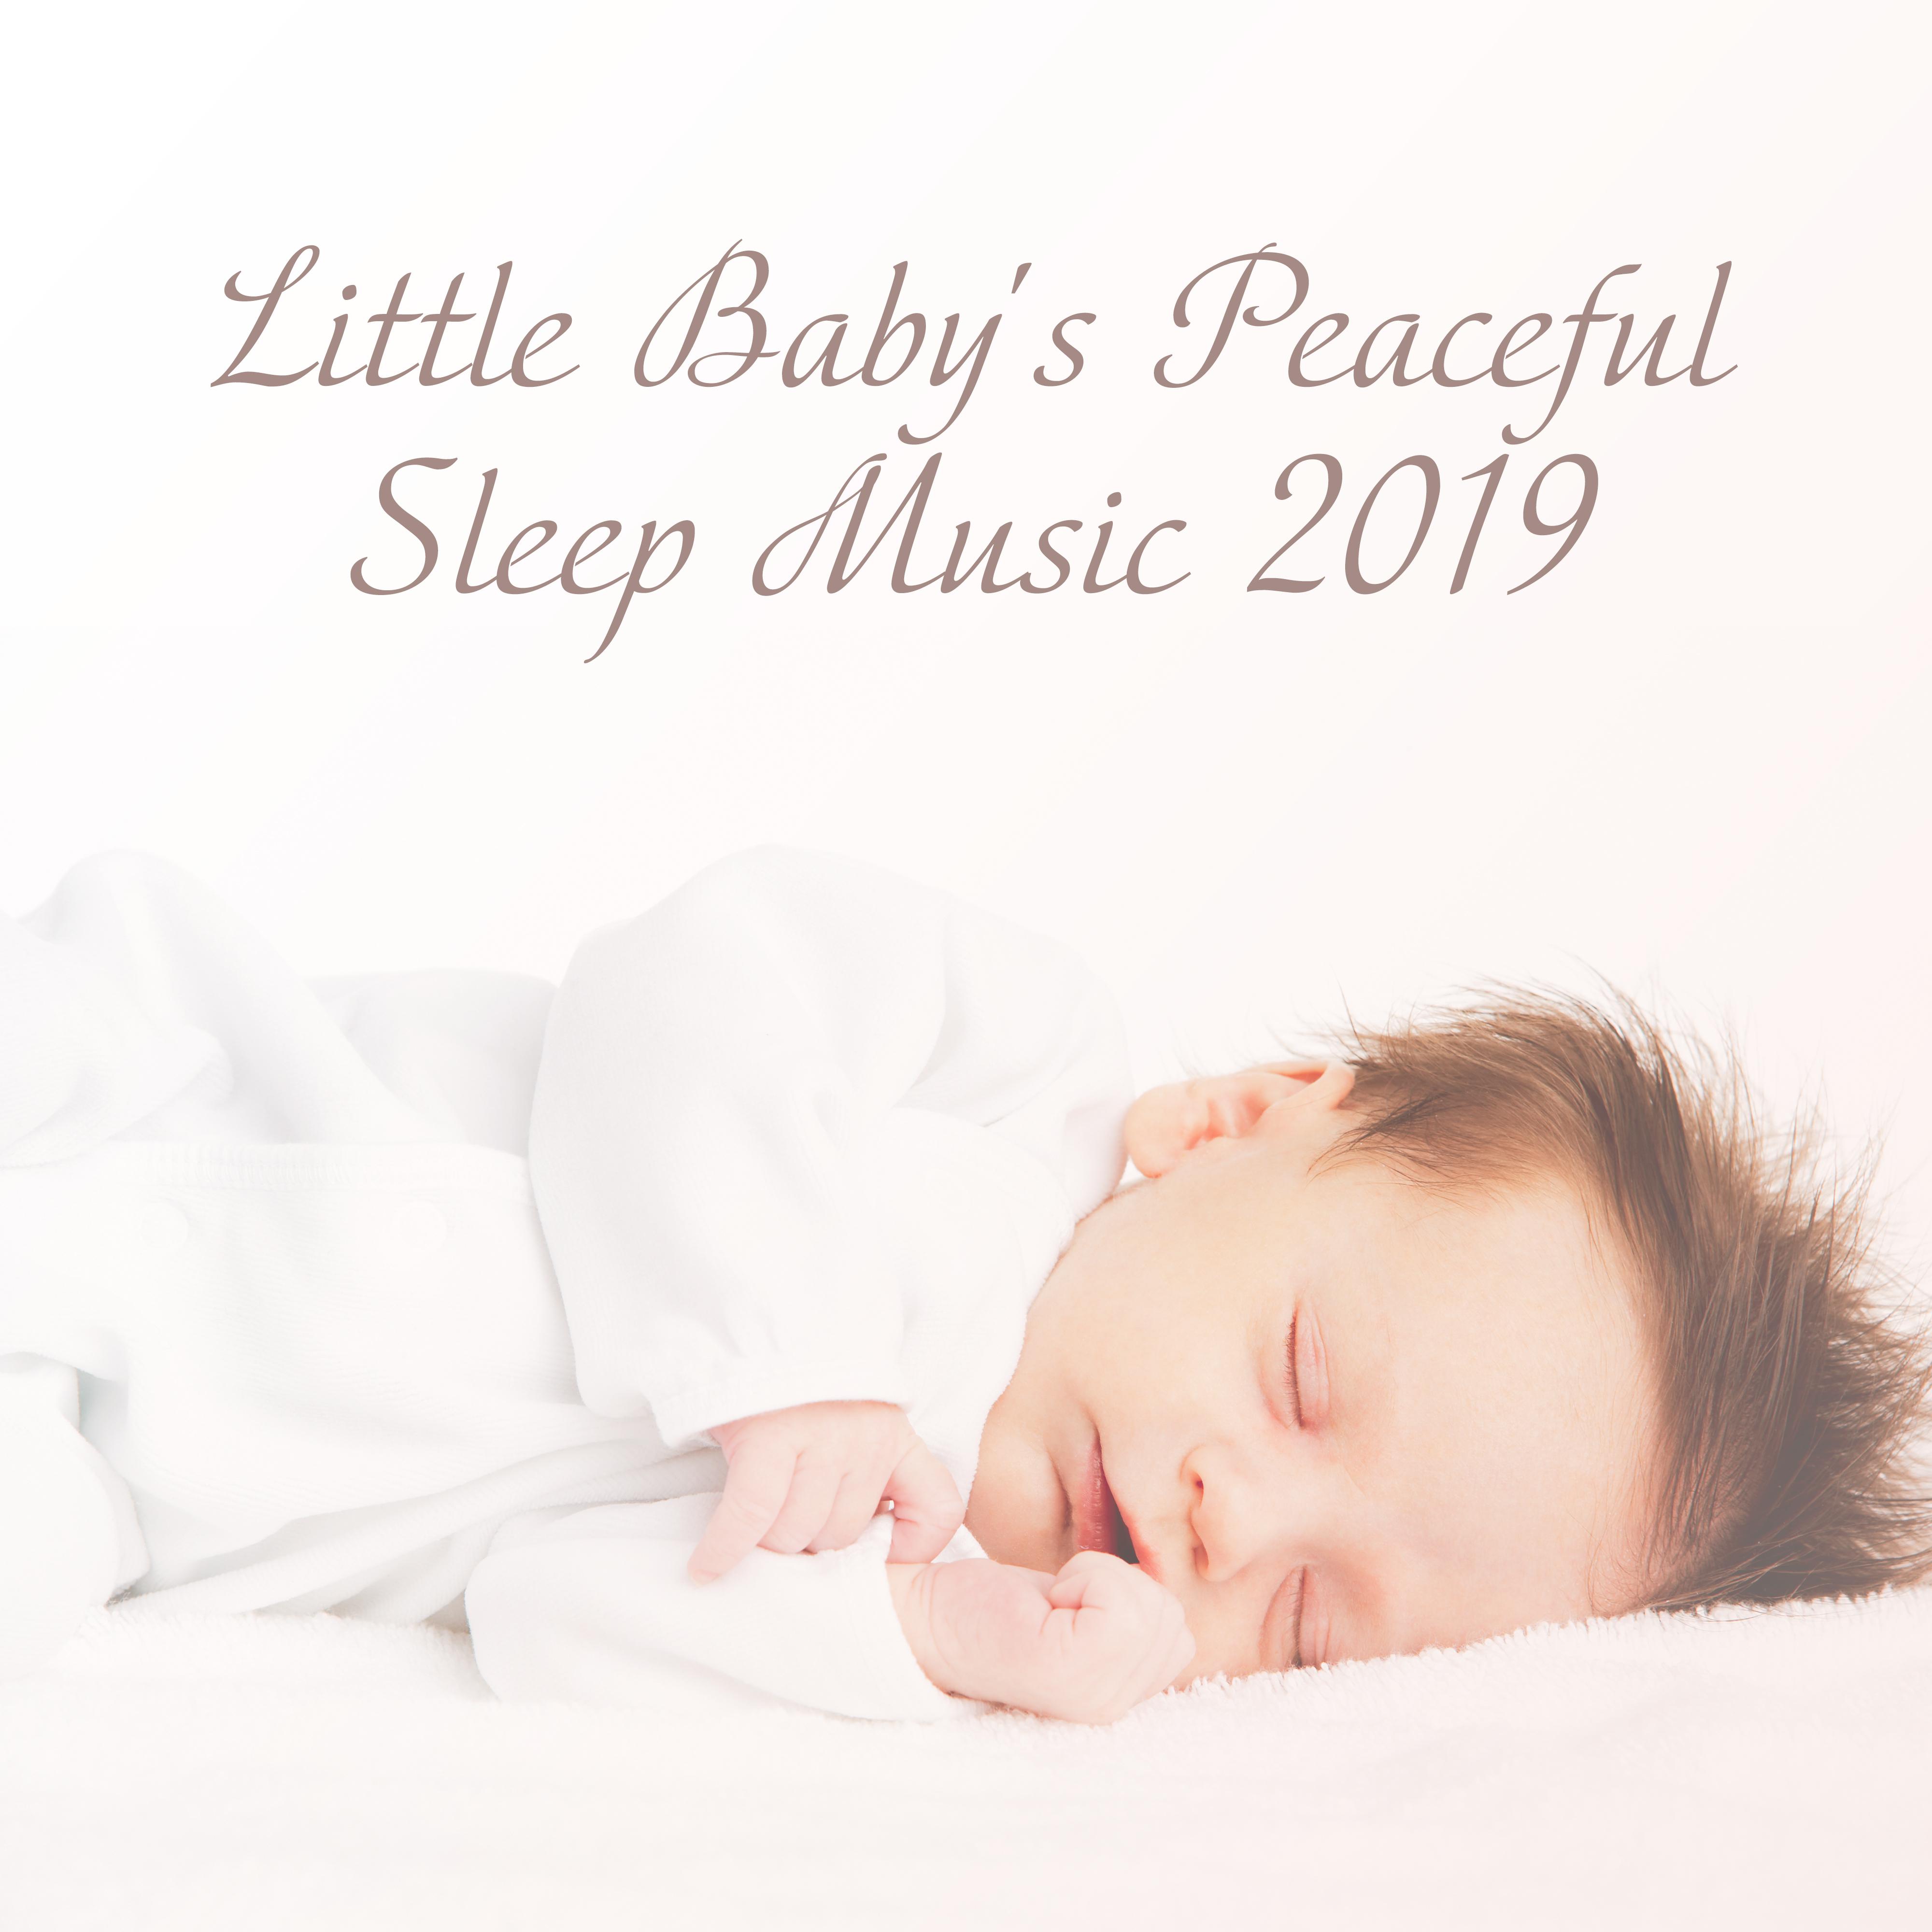 Little Baby's Peaceful Sleep Music 2019